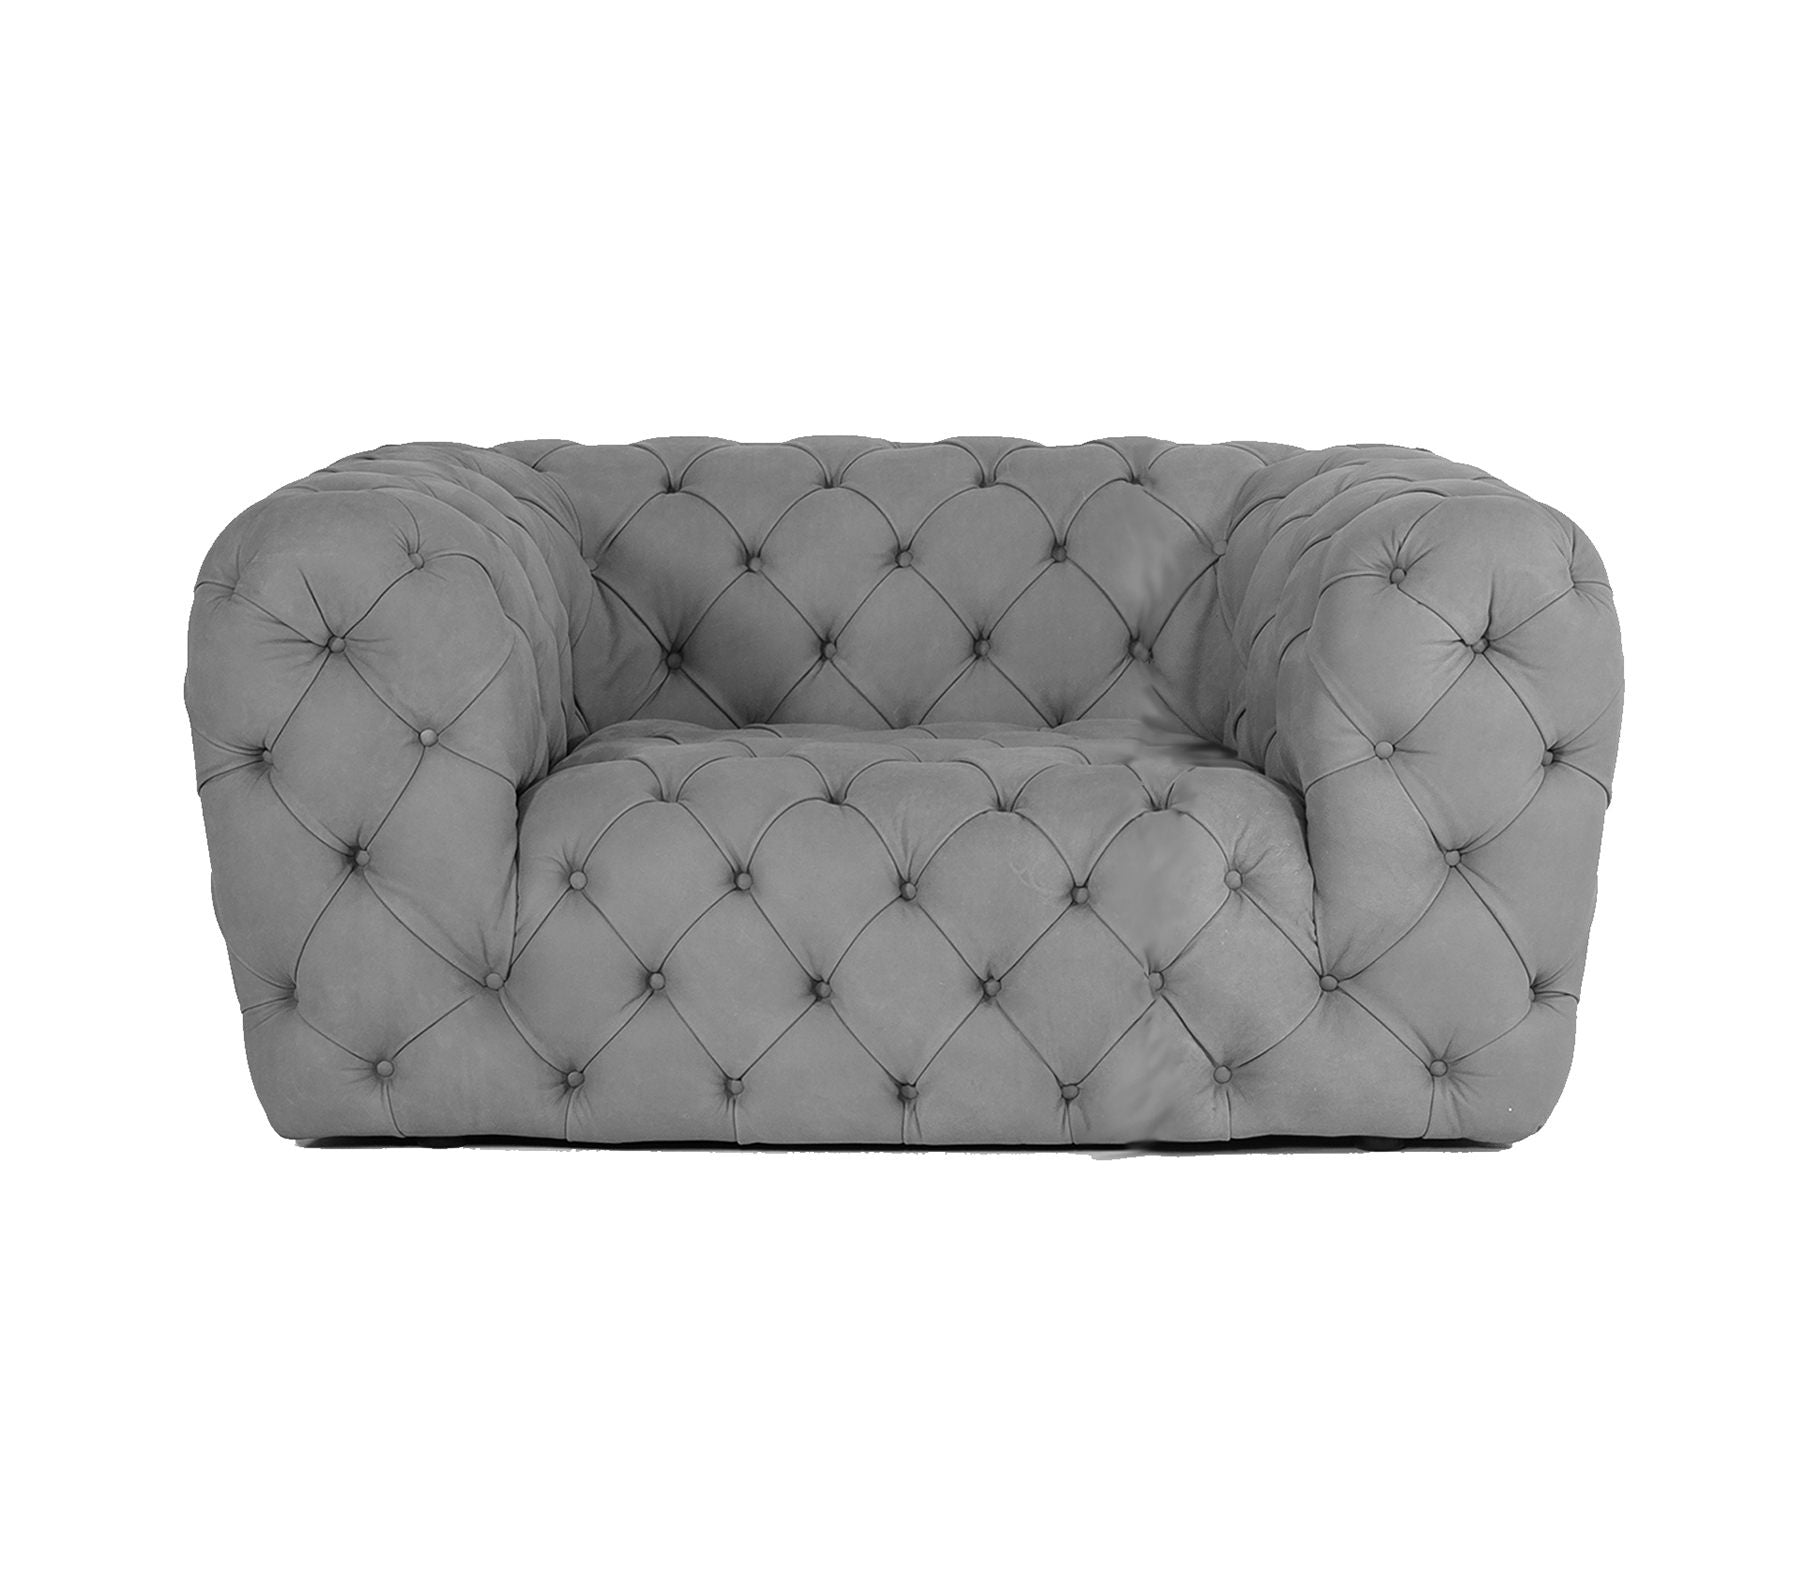 Vig Furniture Lamod Italia Ellington - Italian Grey Nubuck Leather Accent Chair